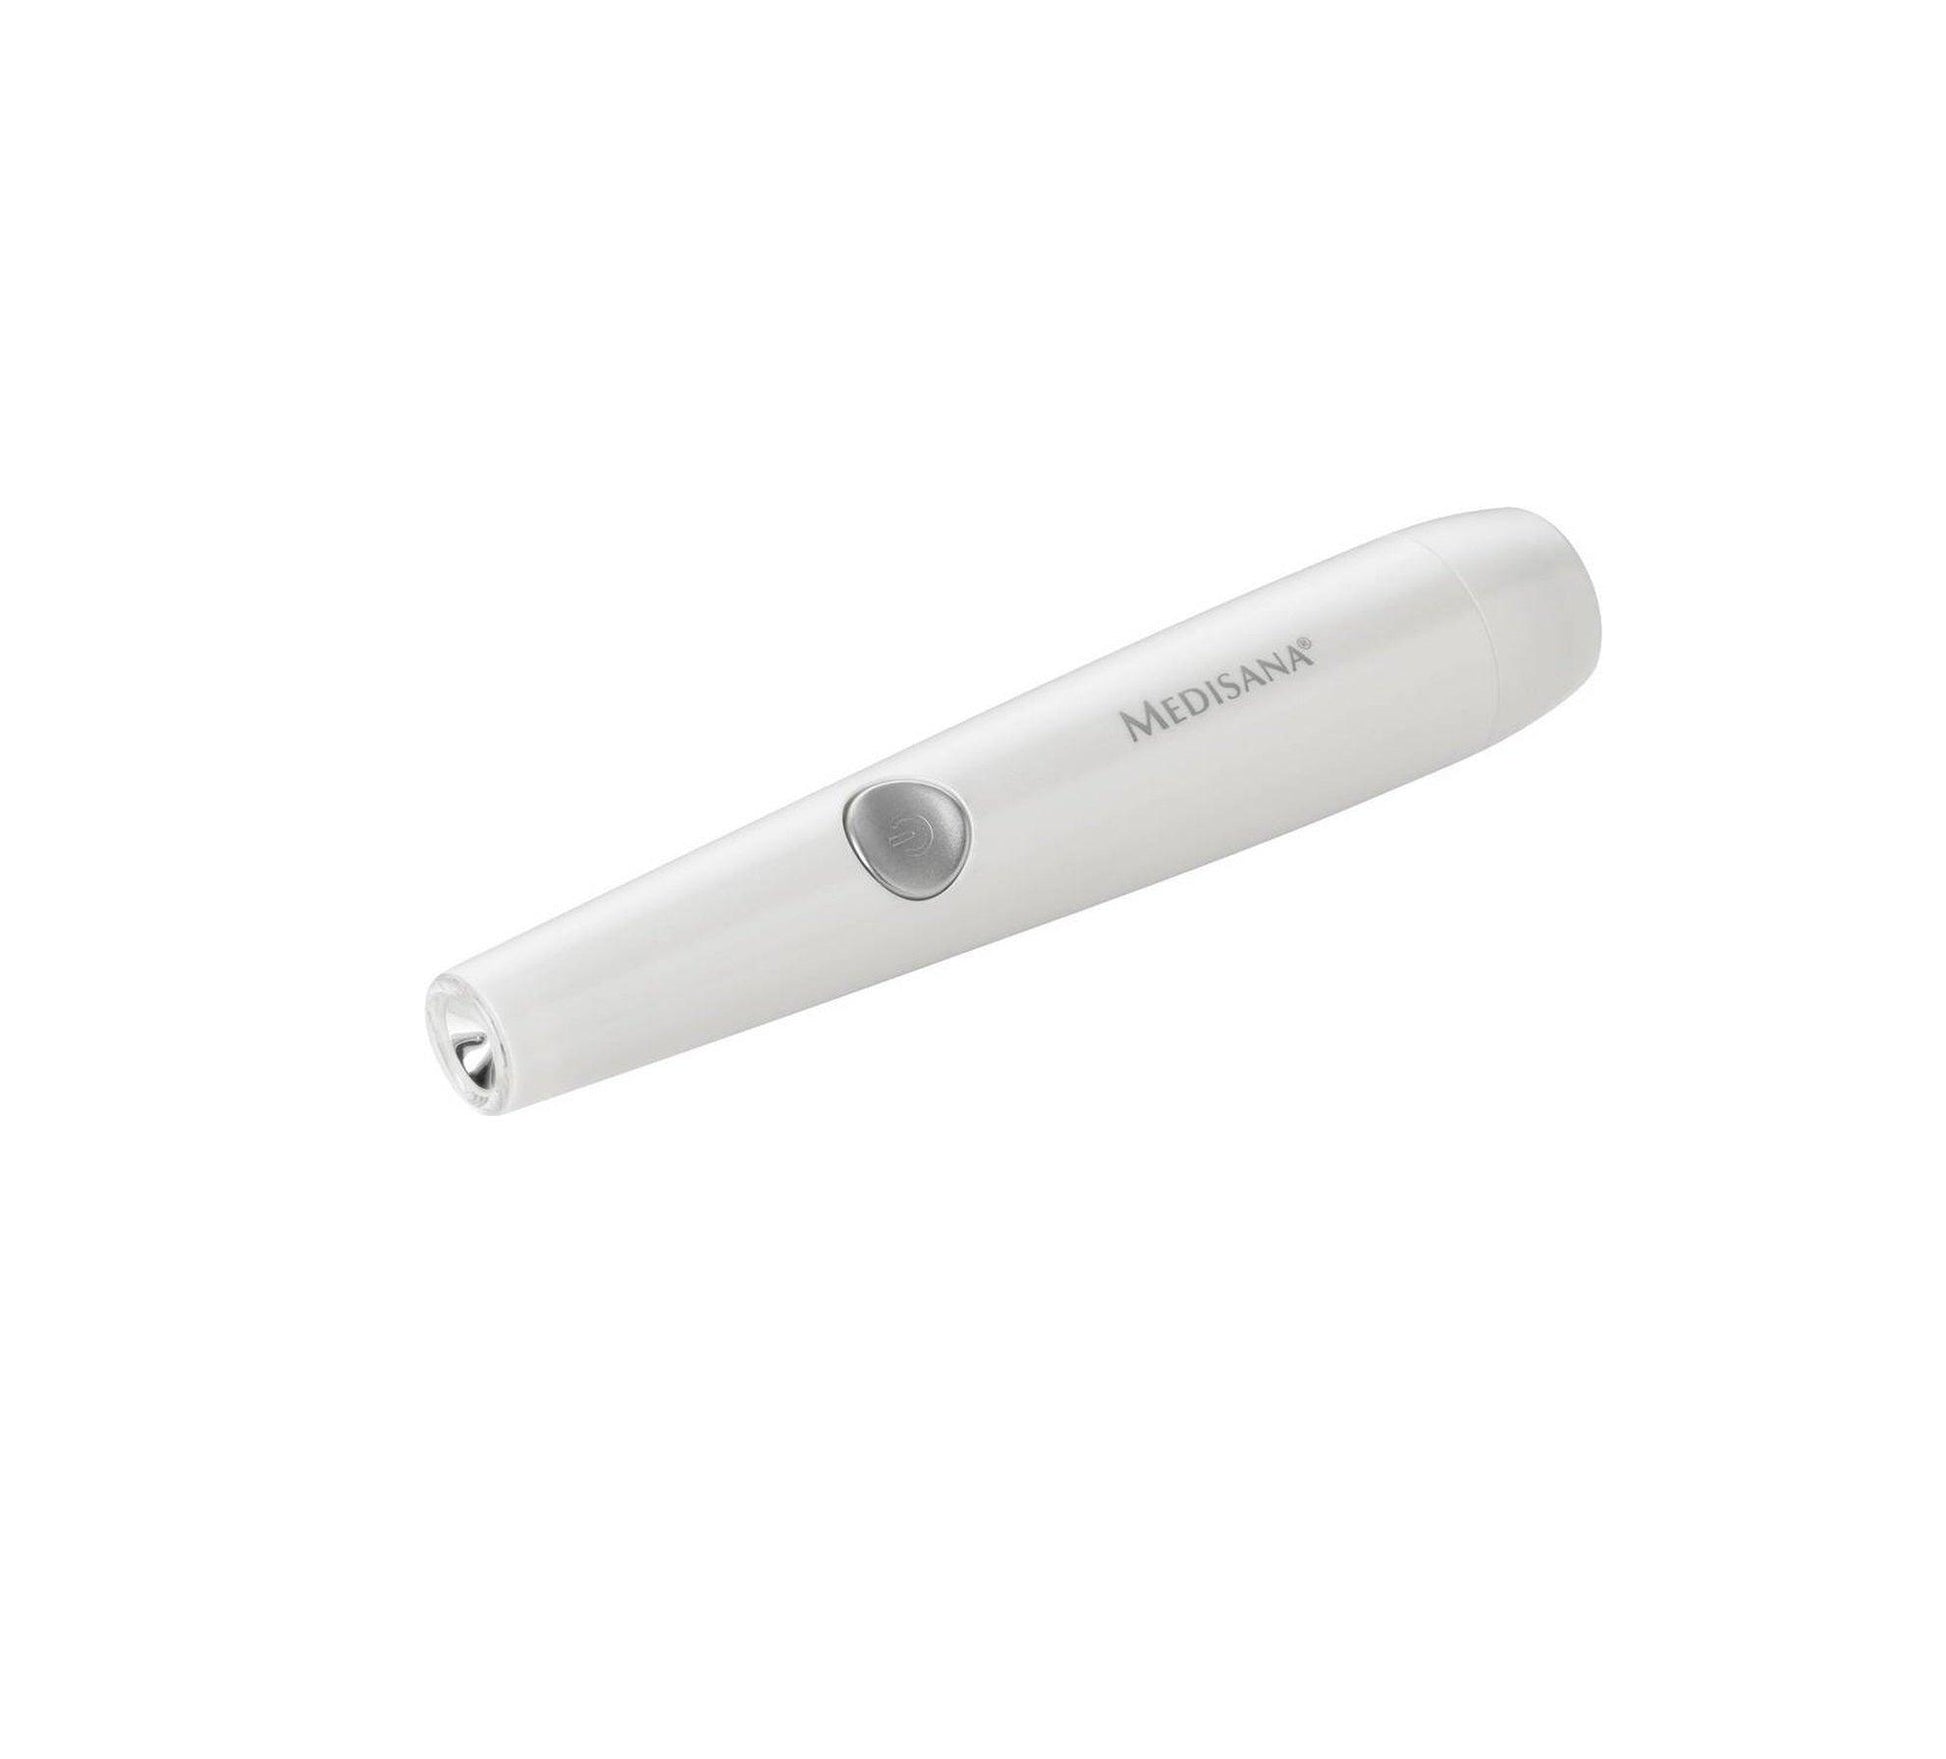 Medisana DC300 LED-Lichttherapie Pen Kopen van  Medisana?- Vanaf €34.95 bij Pucshop.nl